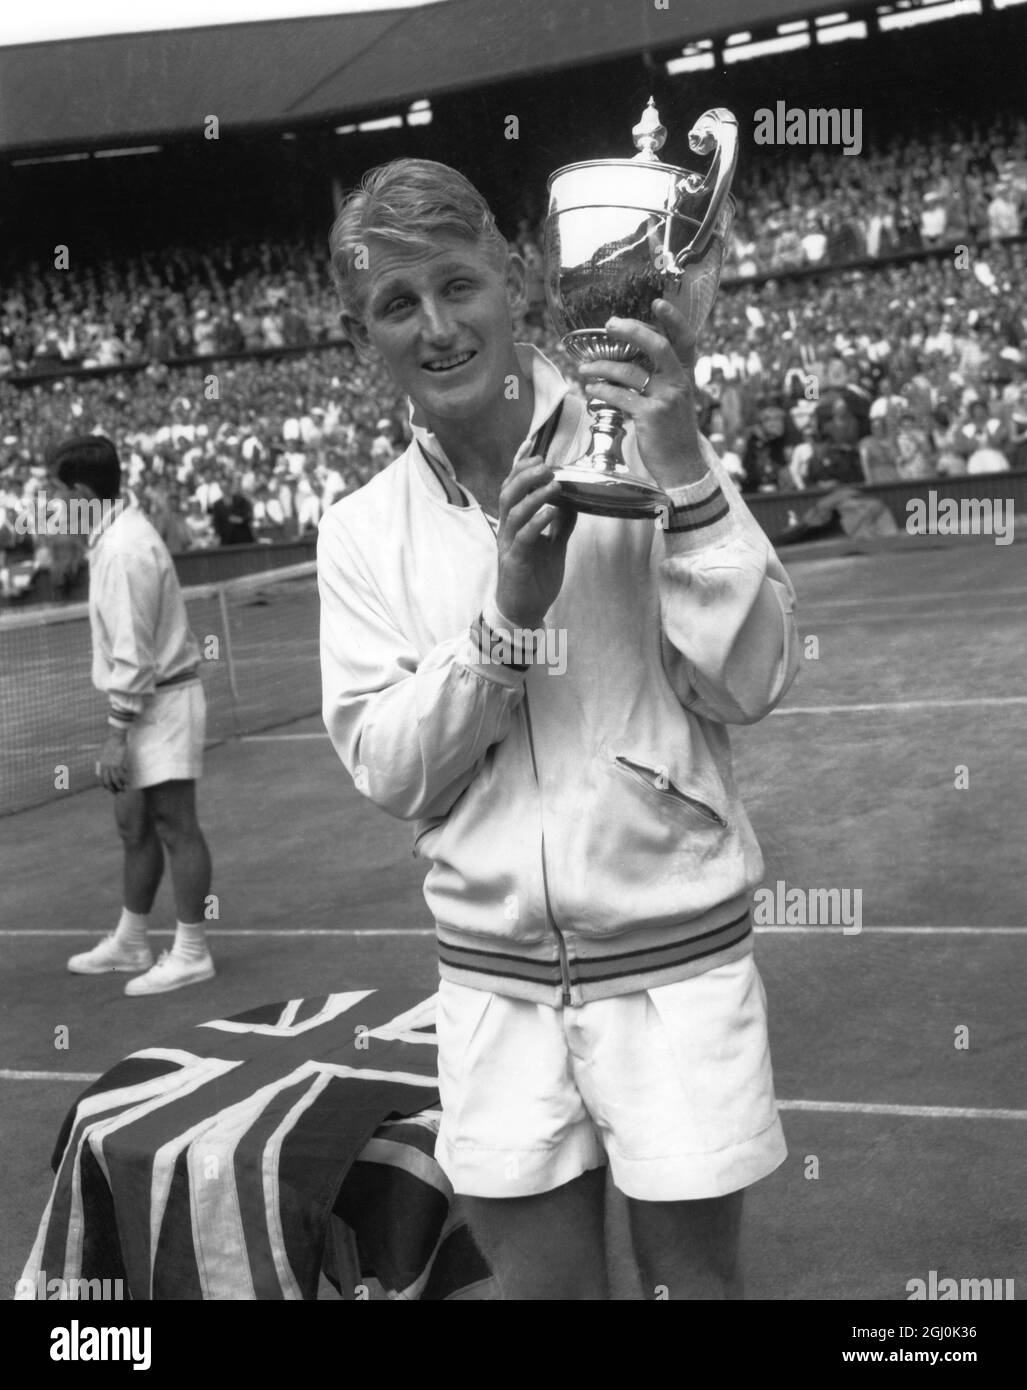 Lew Hoad (AUS) zeigt seinen Pokal, nachdem er am 6. Juli 1956 die Wimbledon Singles Championship auf dem Center Court in Wimbledon gewonnen hat. ©TopFoto *** Ortsüberschrift *** 1956 - L.A. Hoad 1957 - L.A. Hoad Stockfoto